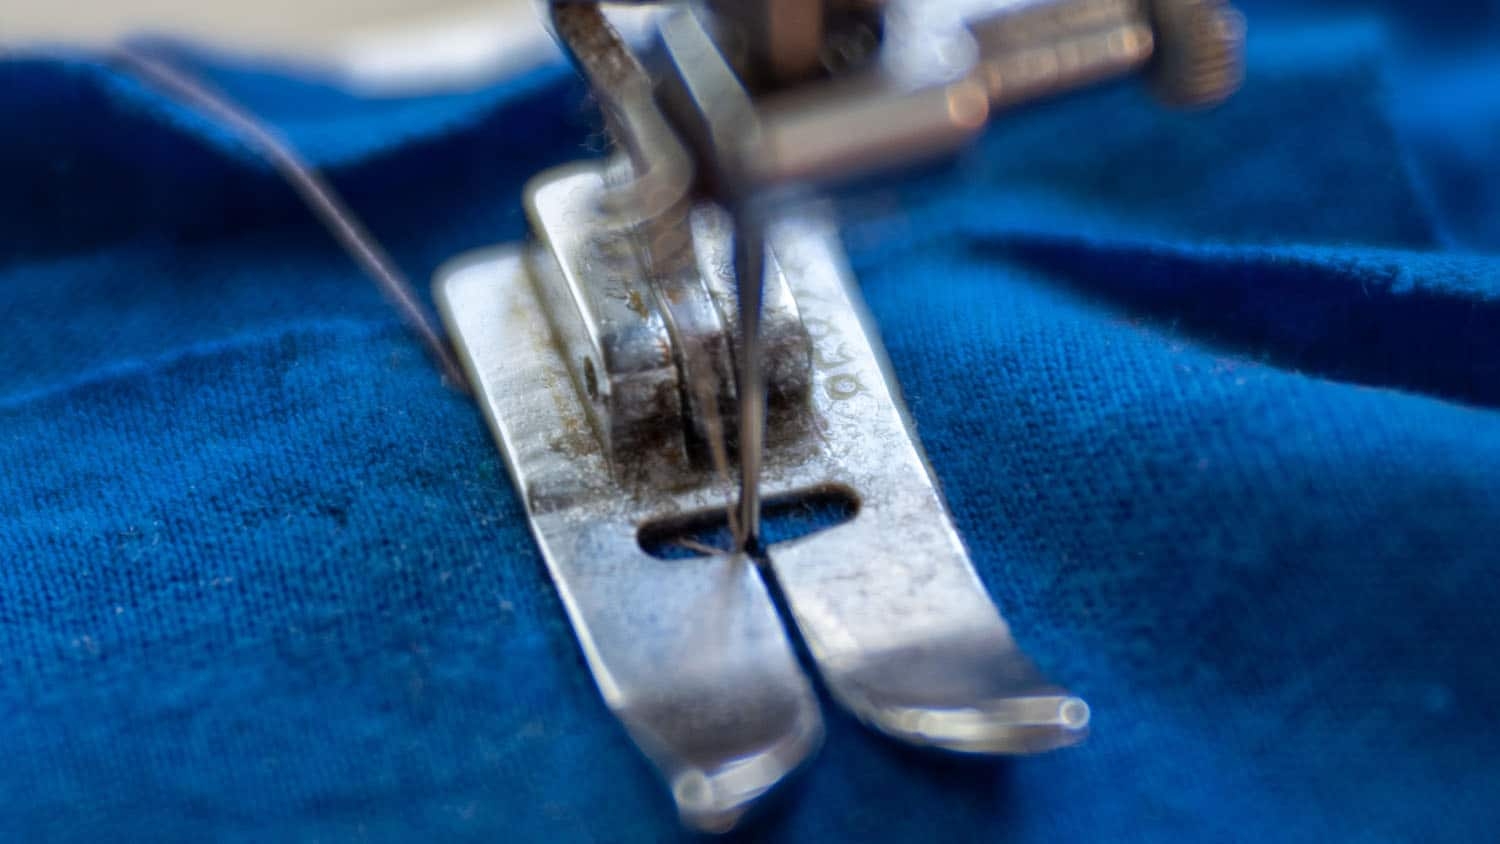 close-up photo of a sewing machine stitching a seam